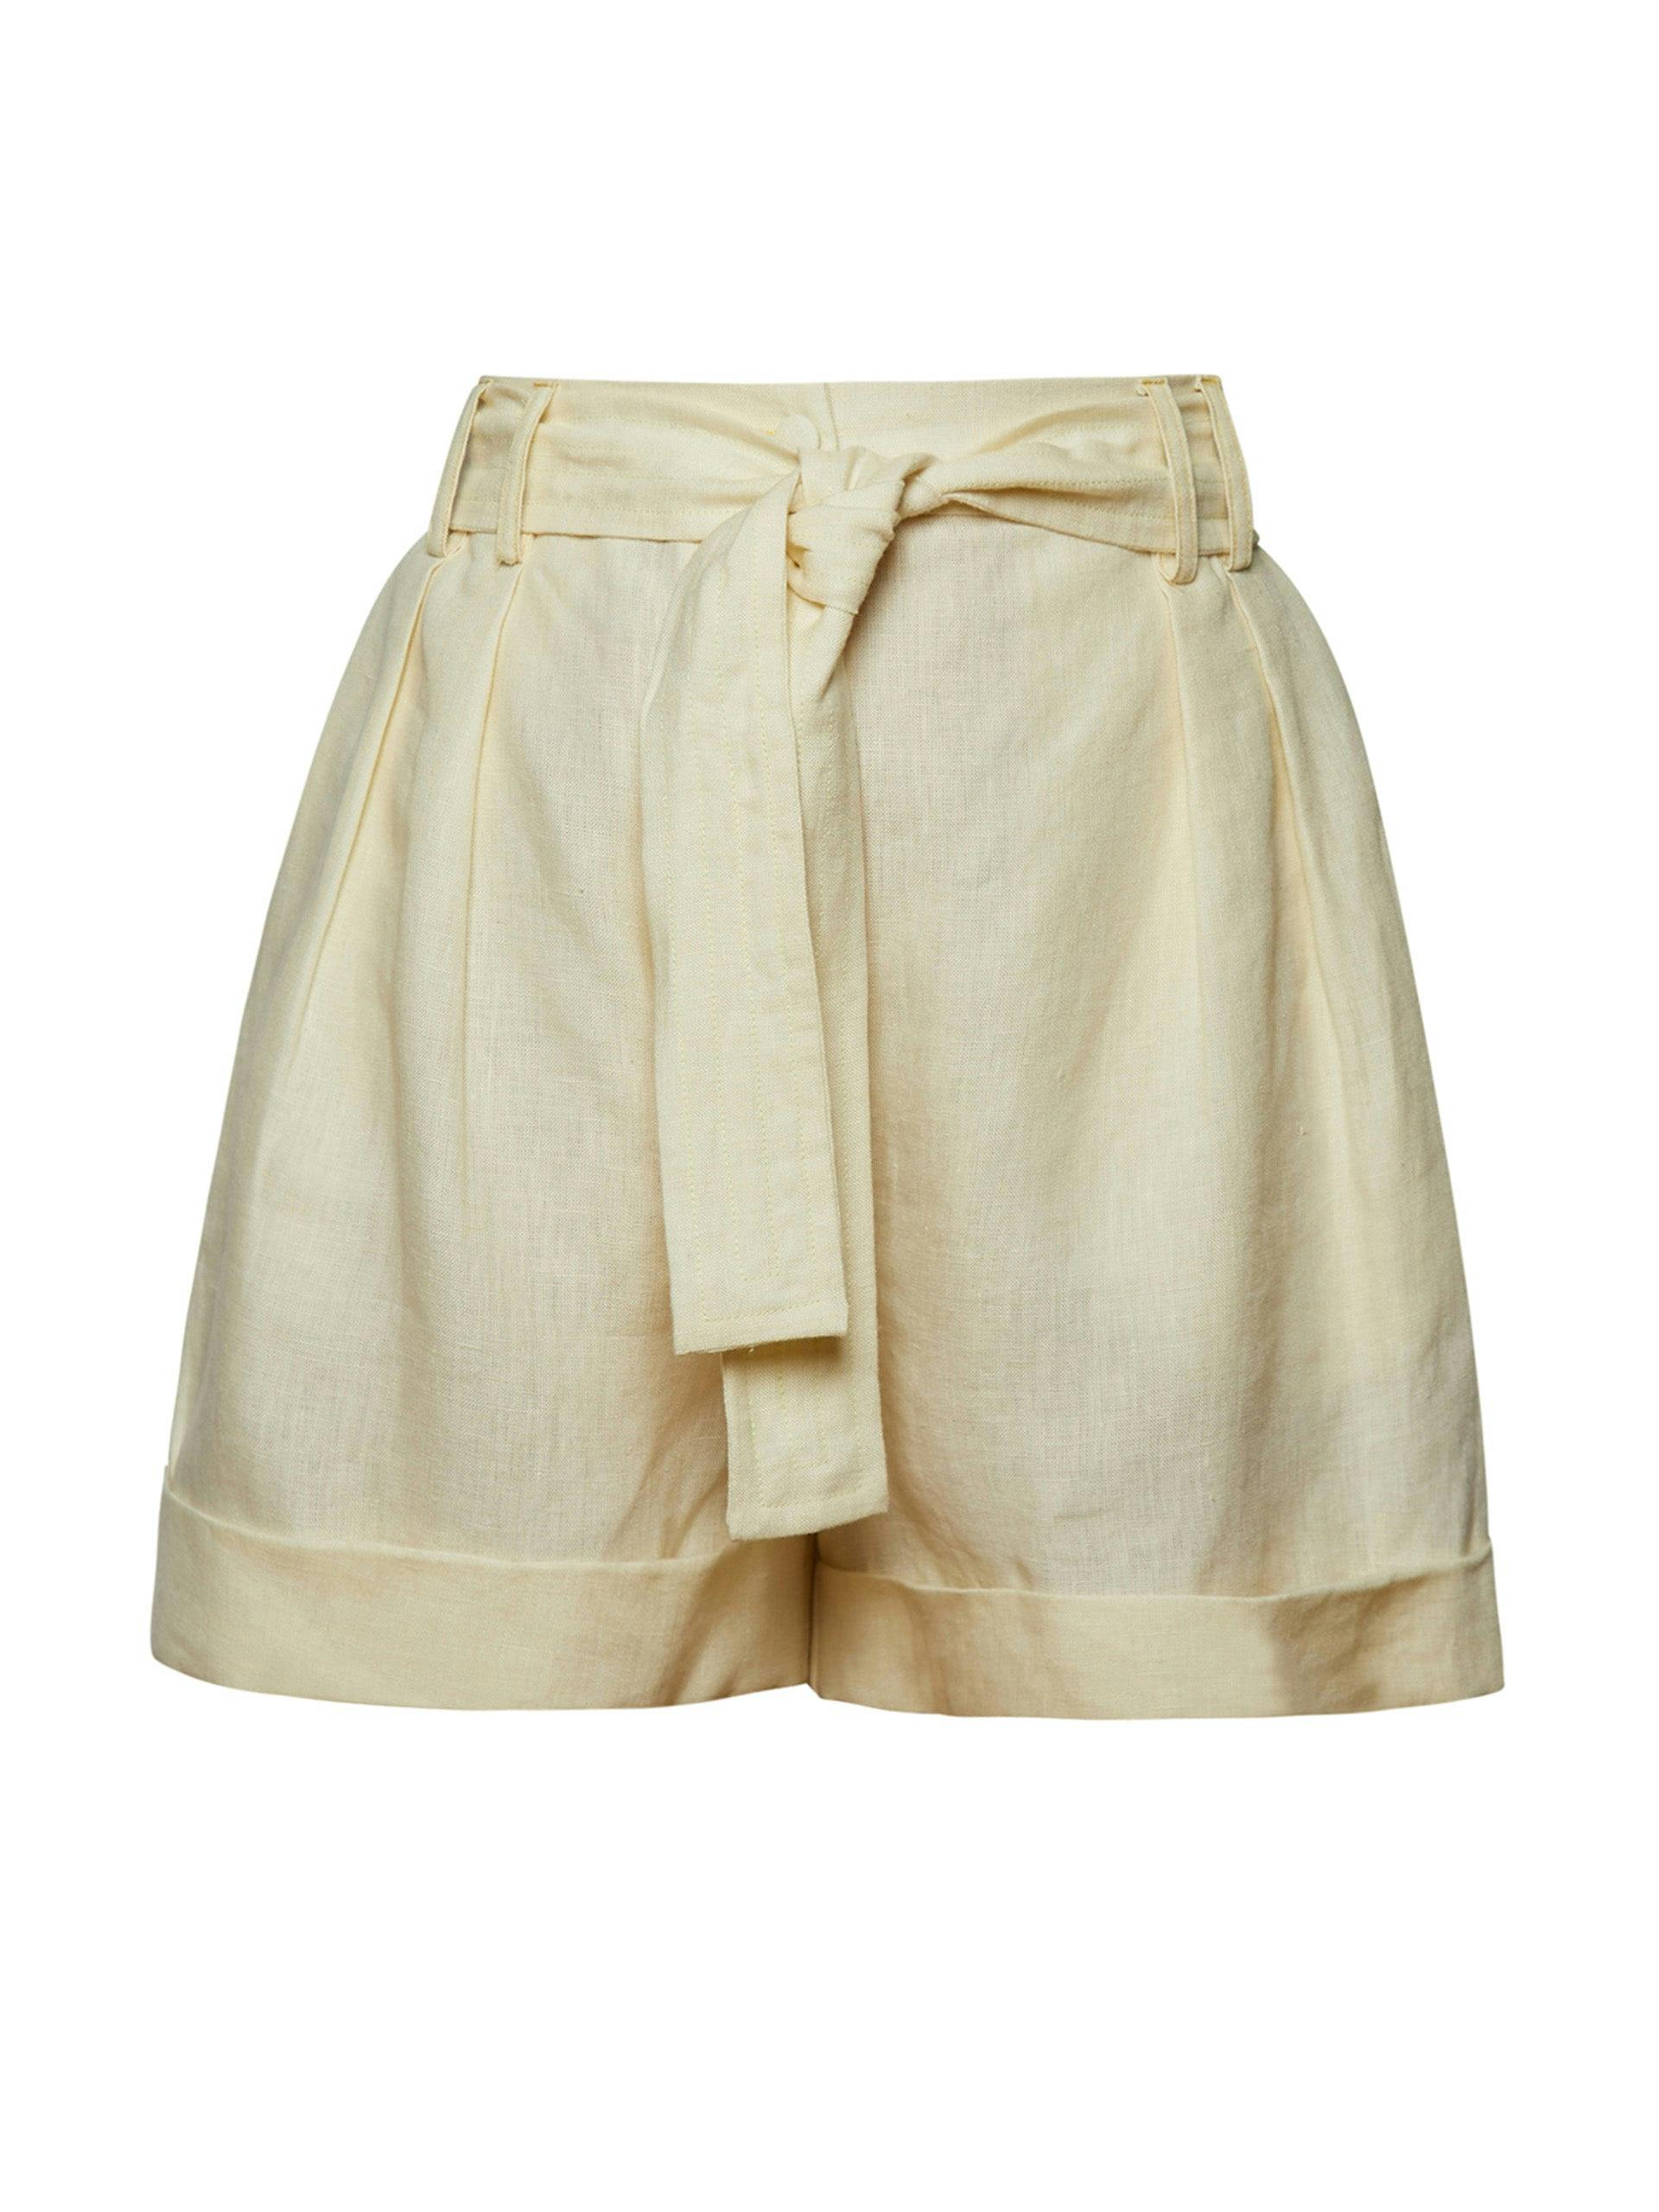 Clementina shorts